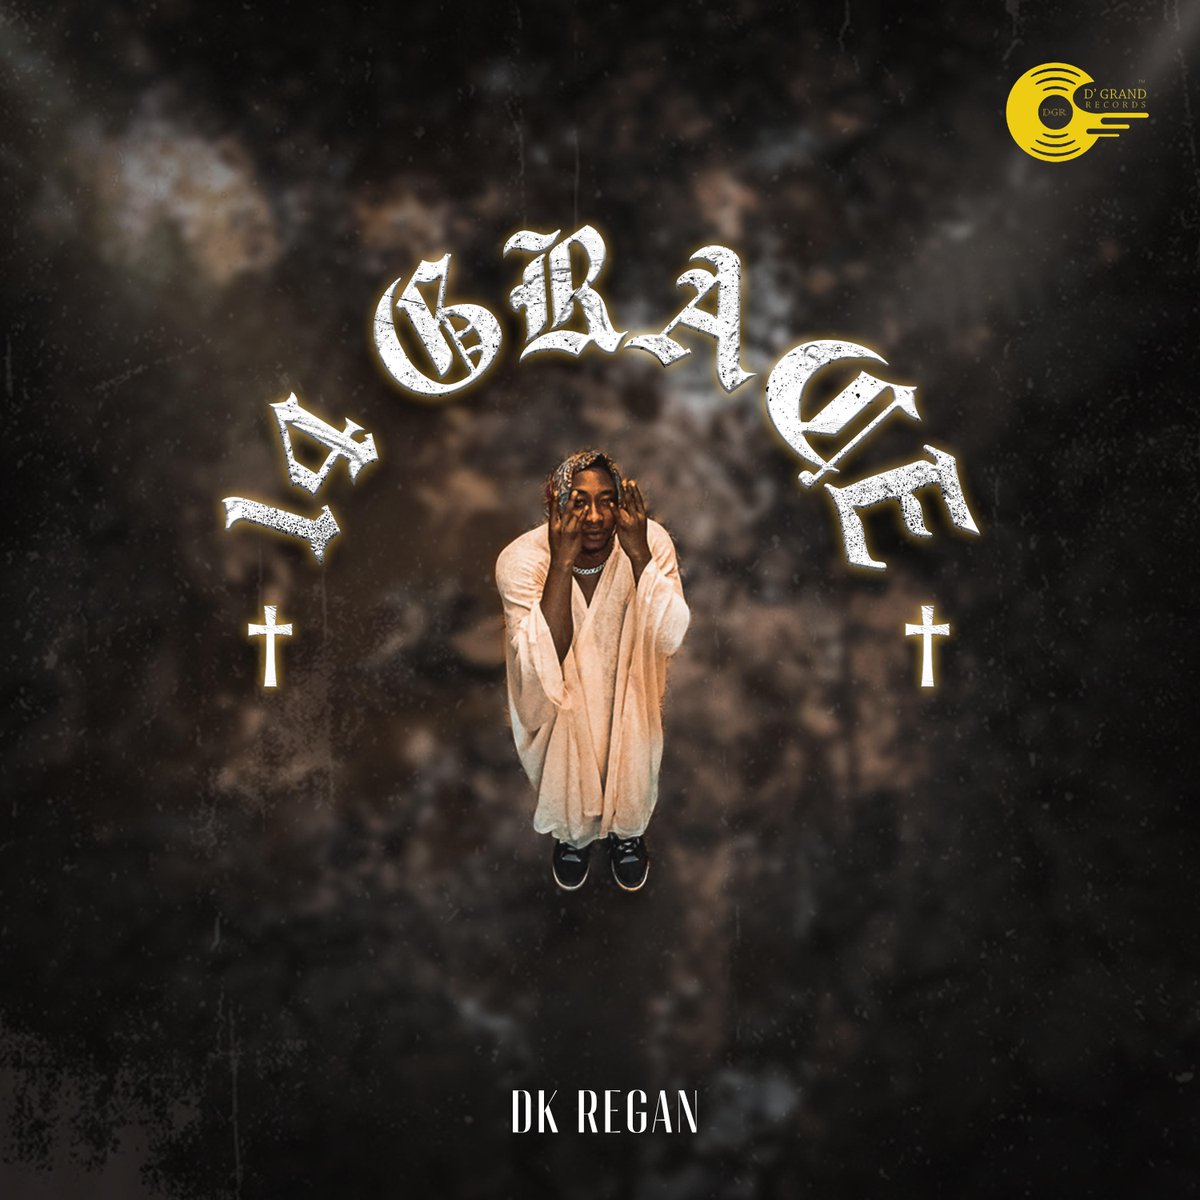 DK REGAN 14 Grace (EP) Album Cover